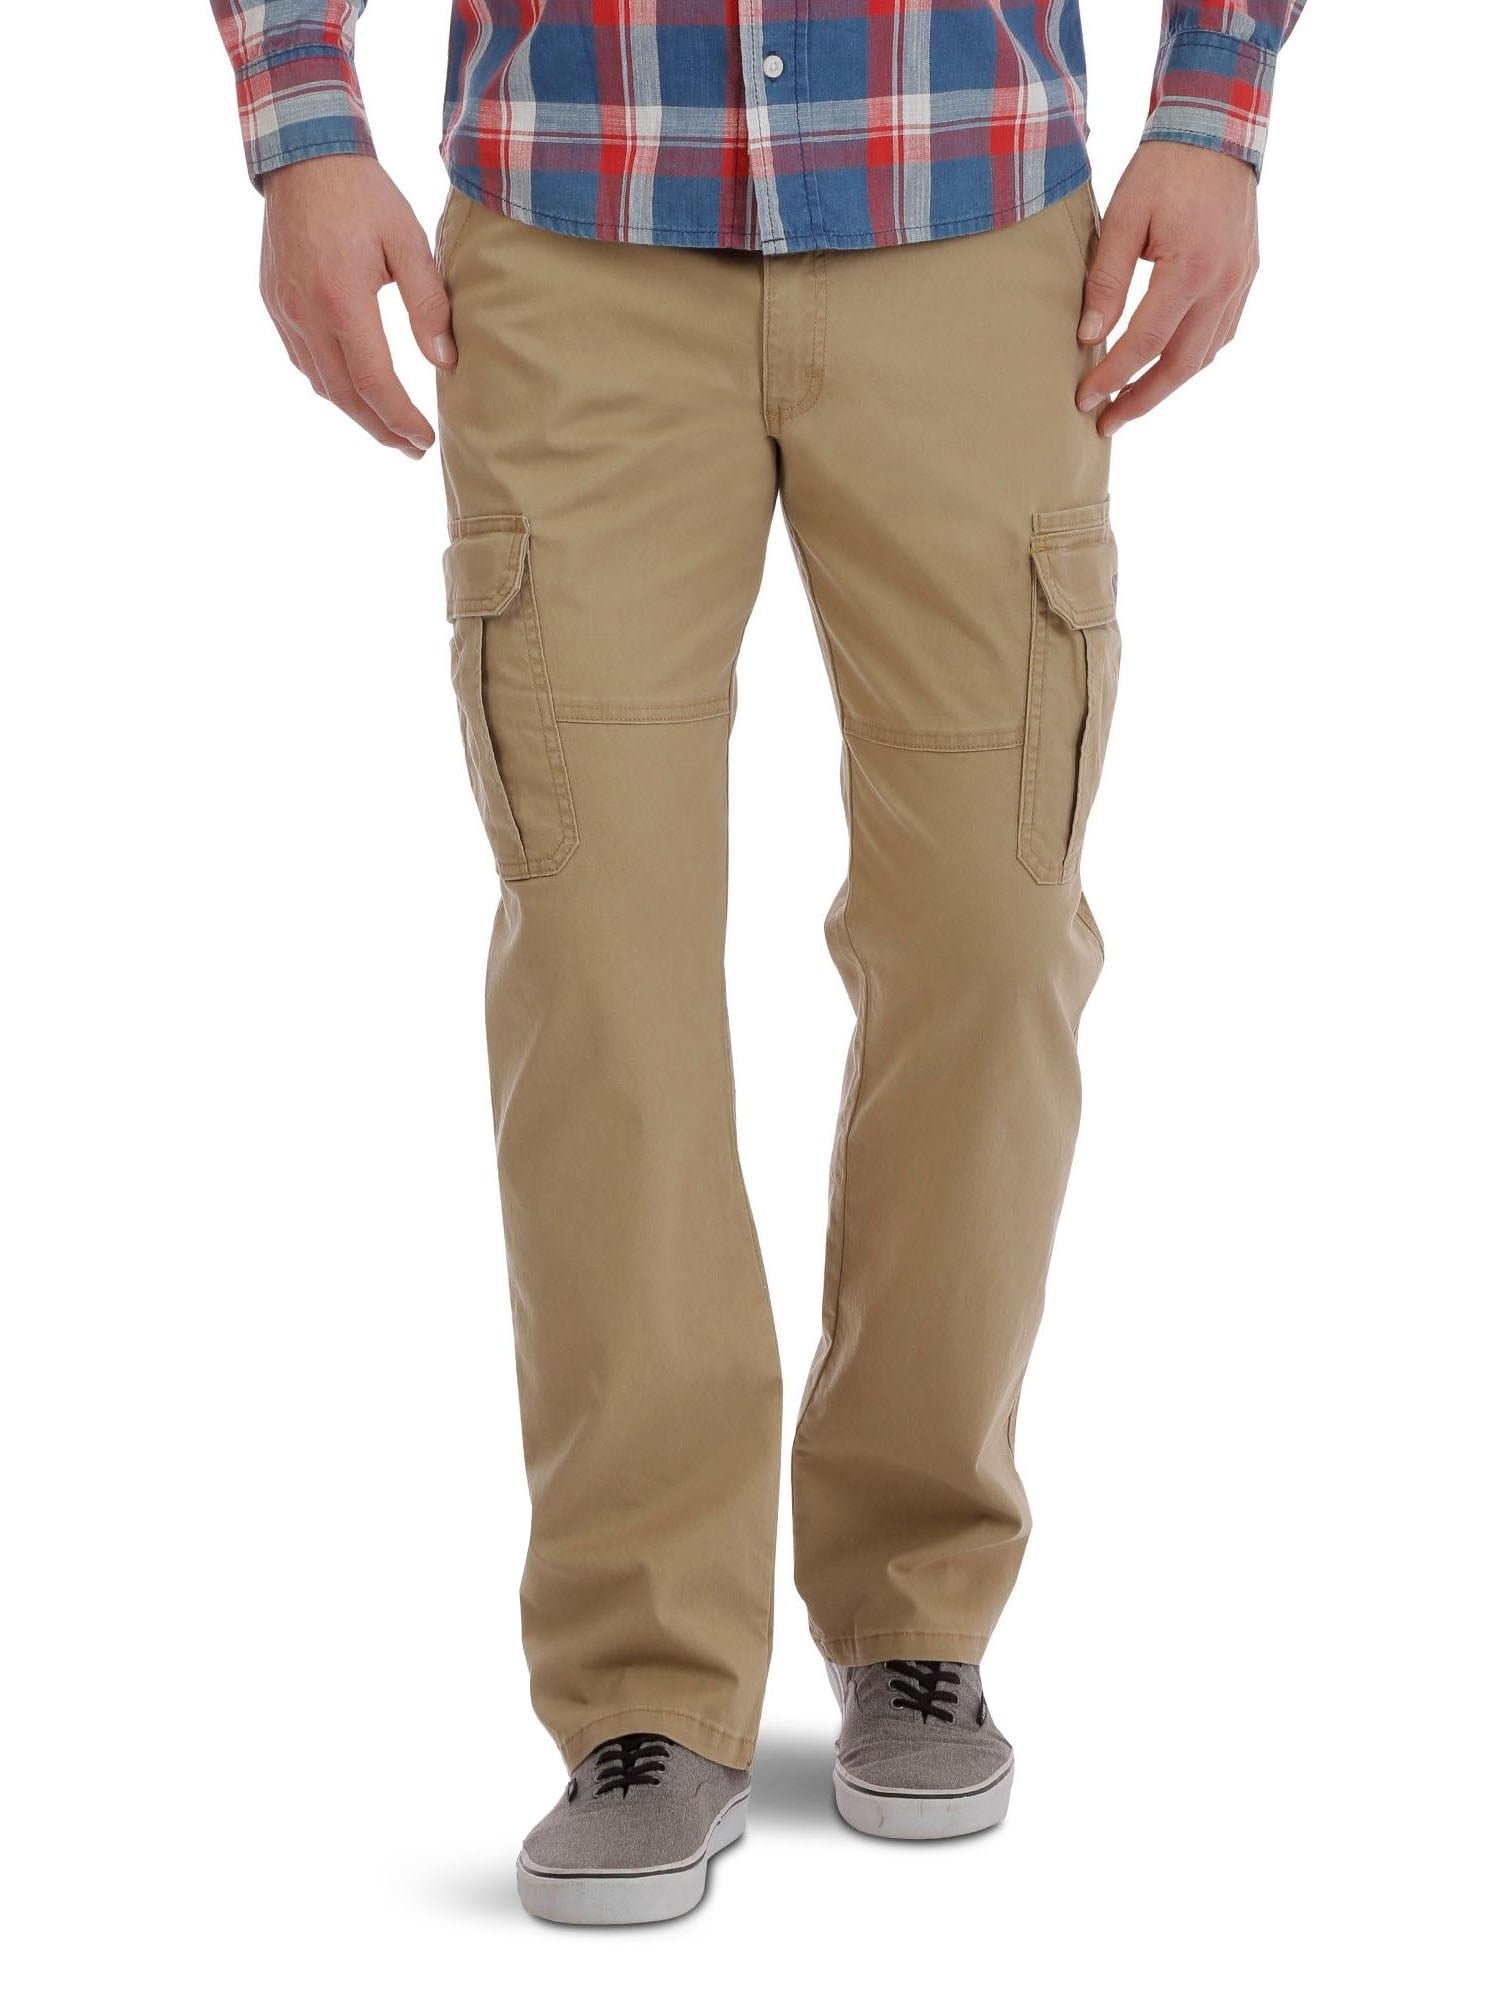 Men's Wrangler Workwear Ranger Cargo Pant - Walmart.com